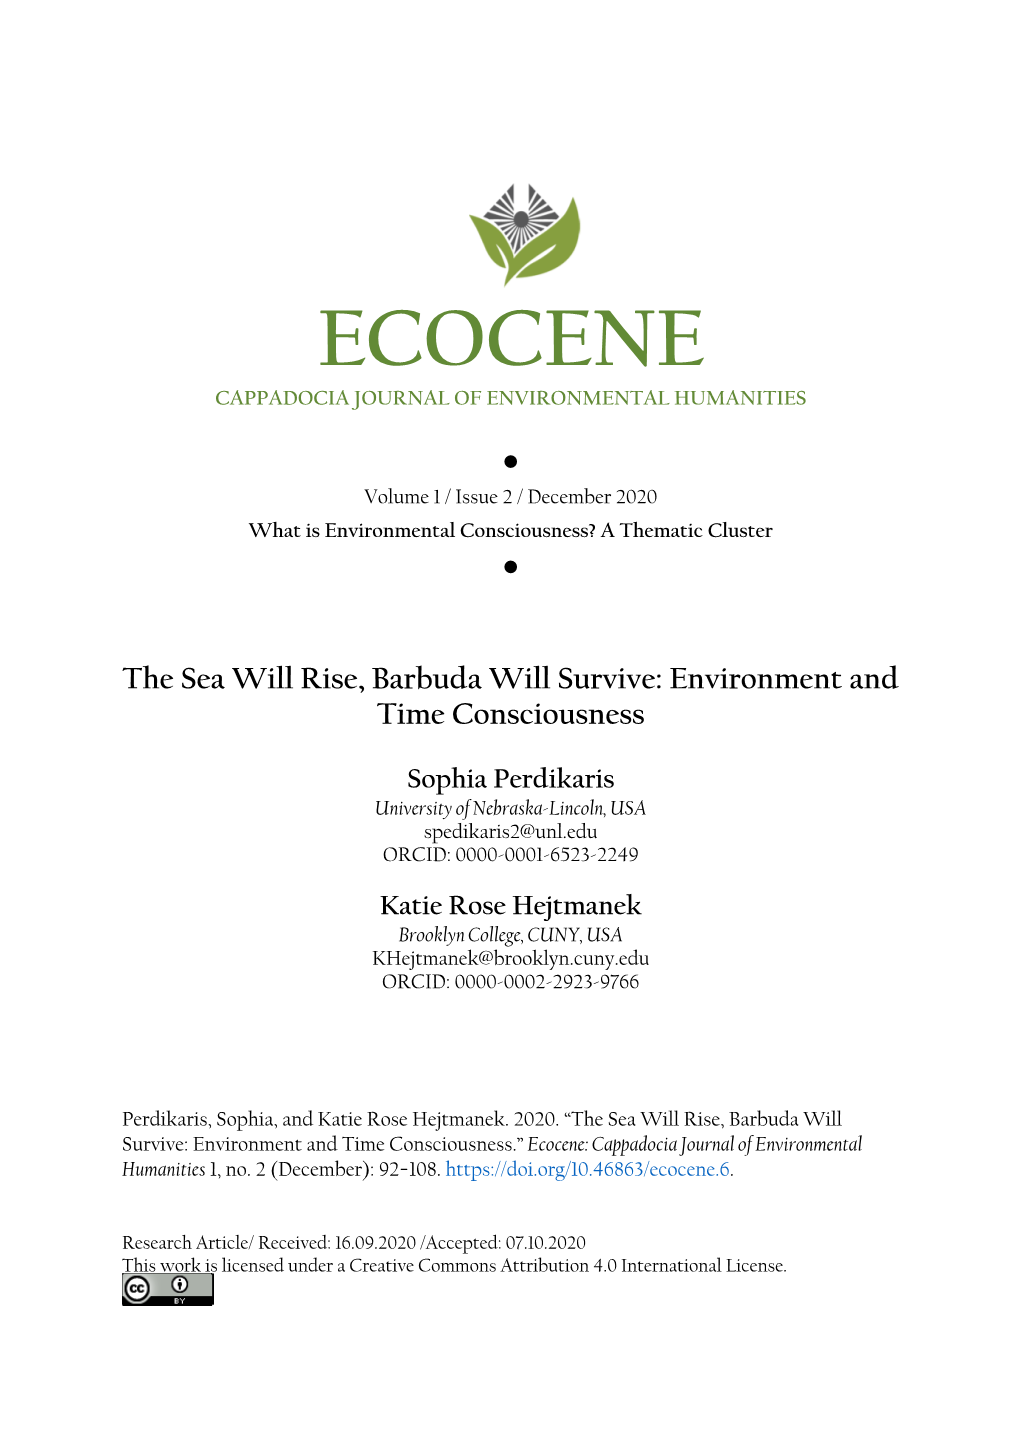 Ecocene: Cappadocia Journal of Environmental Humanities 1, No